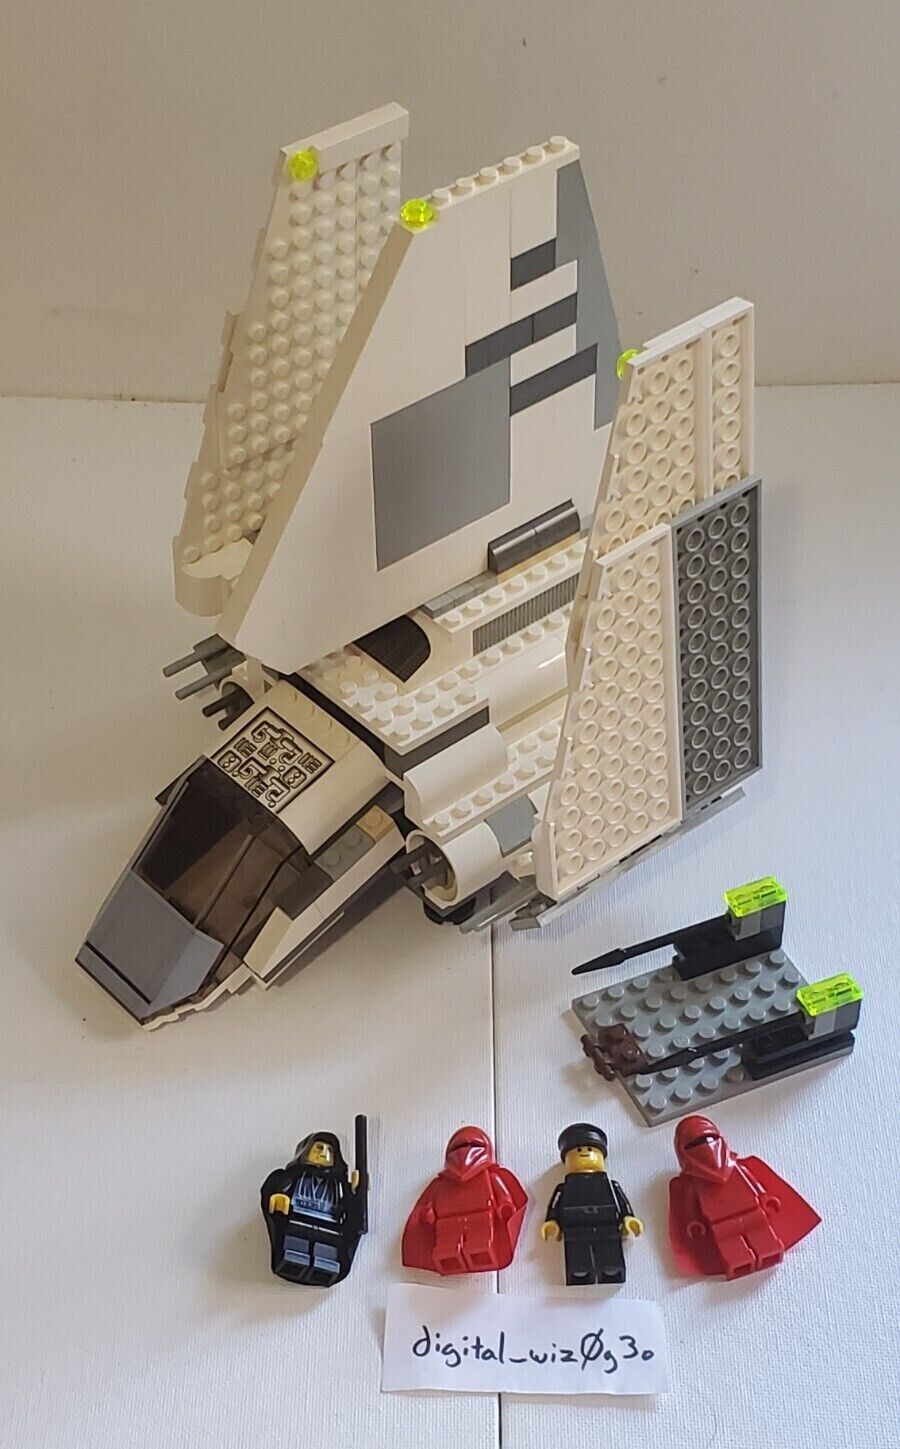 2001 LEGO 7166 Star Wars Imperial Shuttle - 100% Complete - Near Mint - vintage